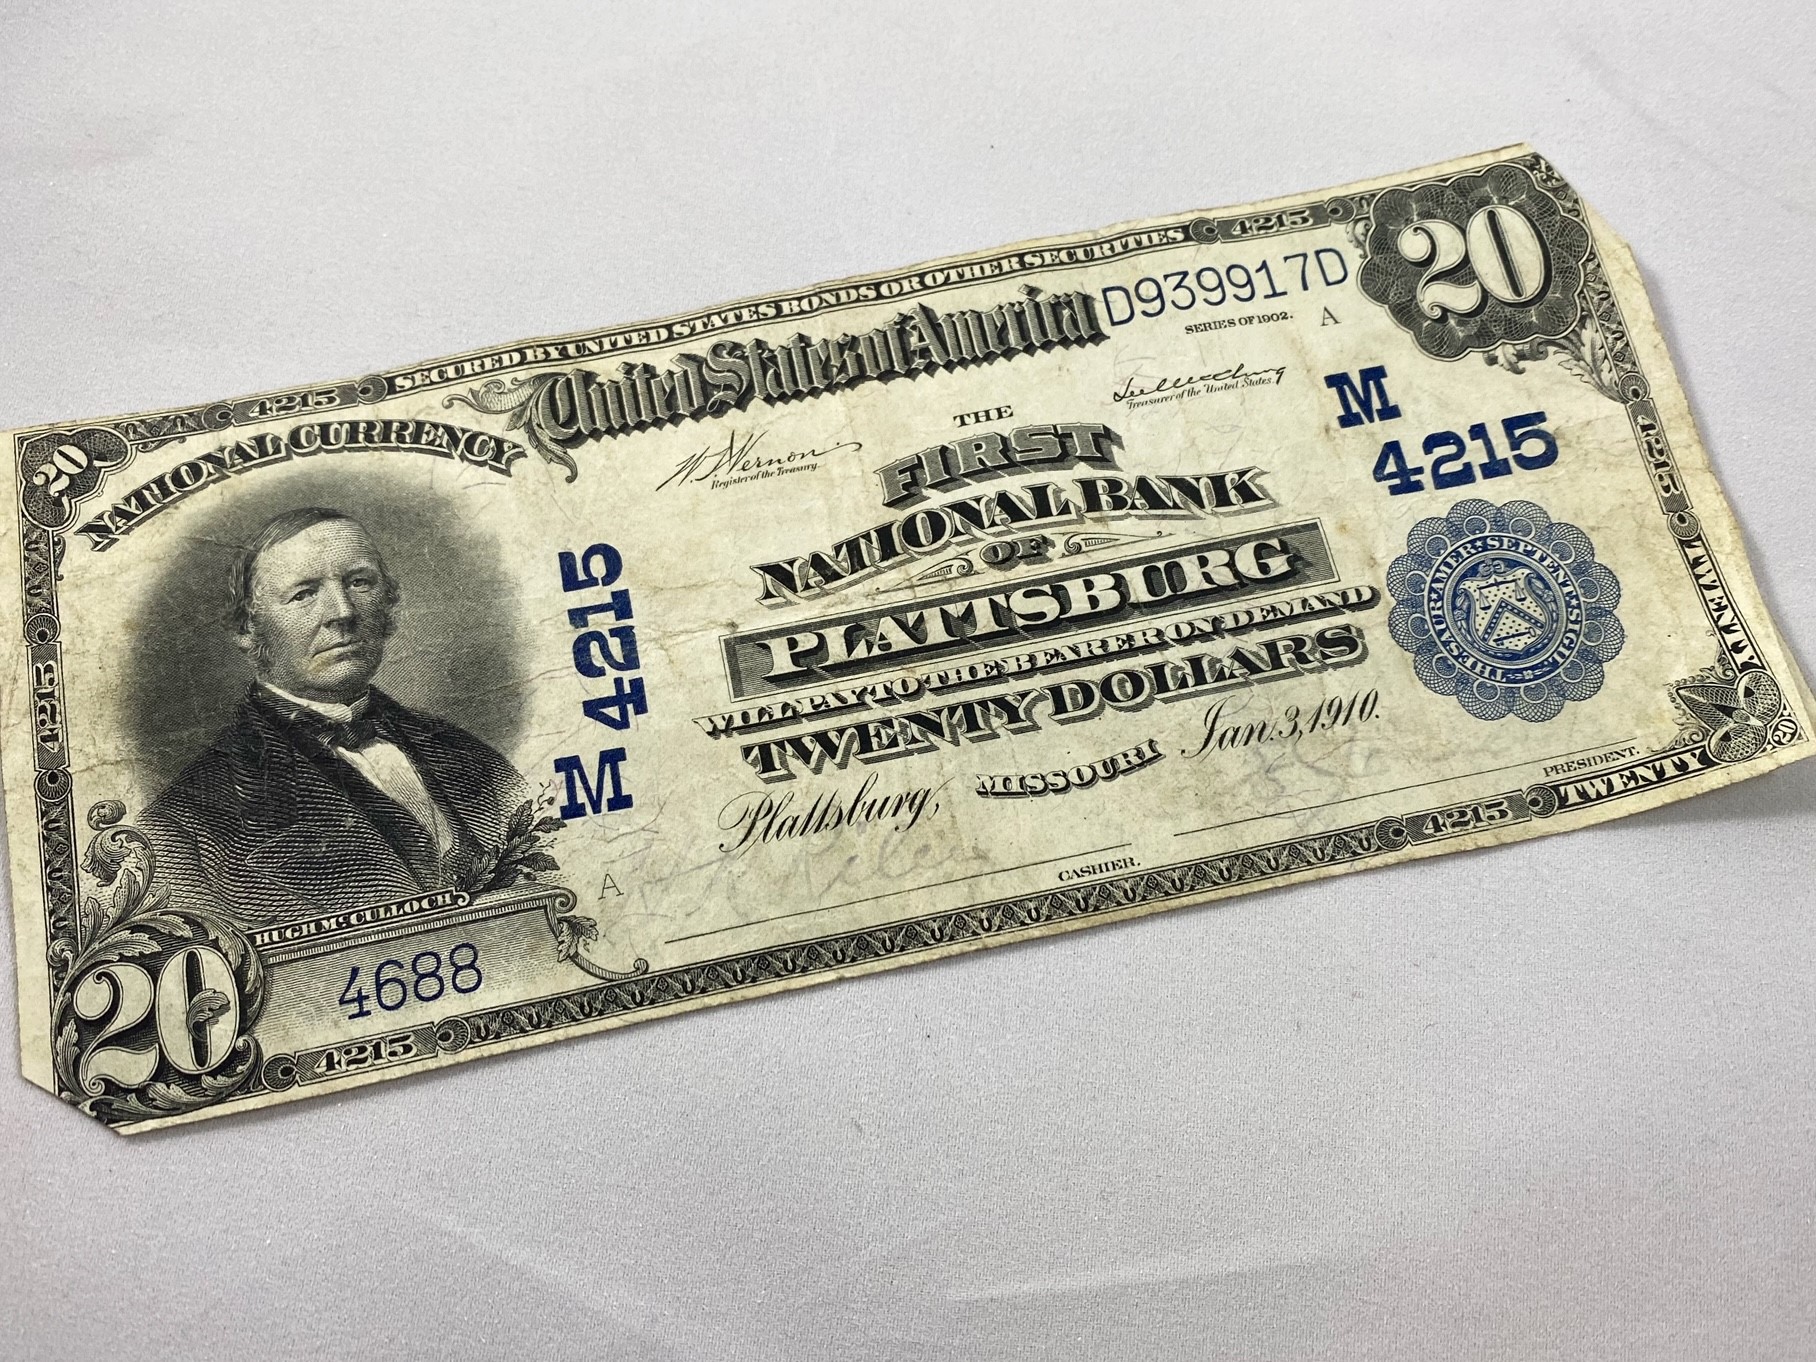 Lot 3747: $20.00 Bill National Currency The First Bank of Plattsburg Plattsburg, MO Jan. 3, 1910